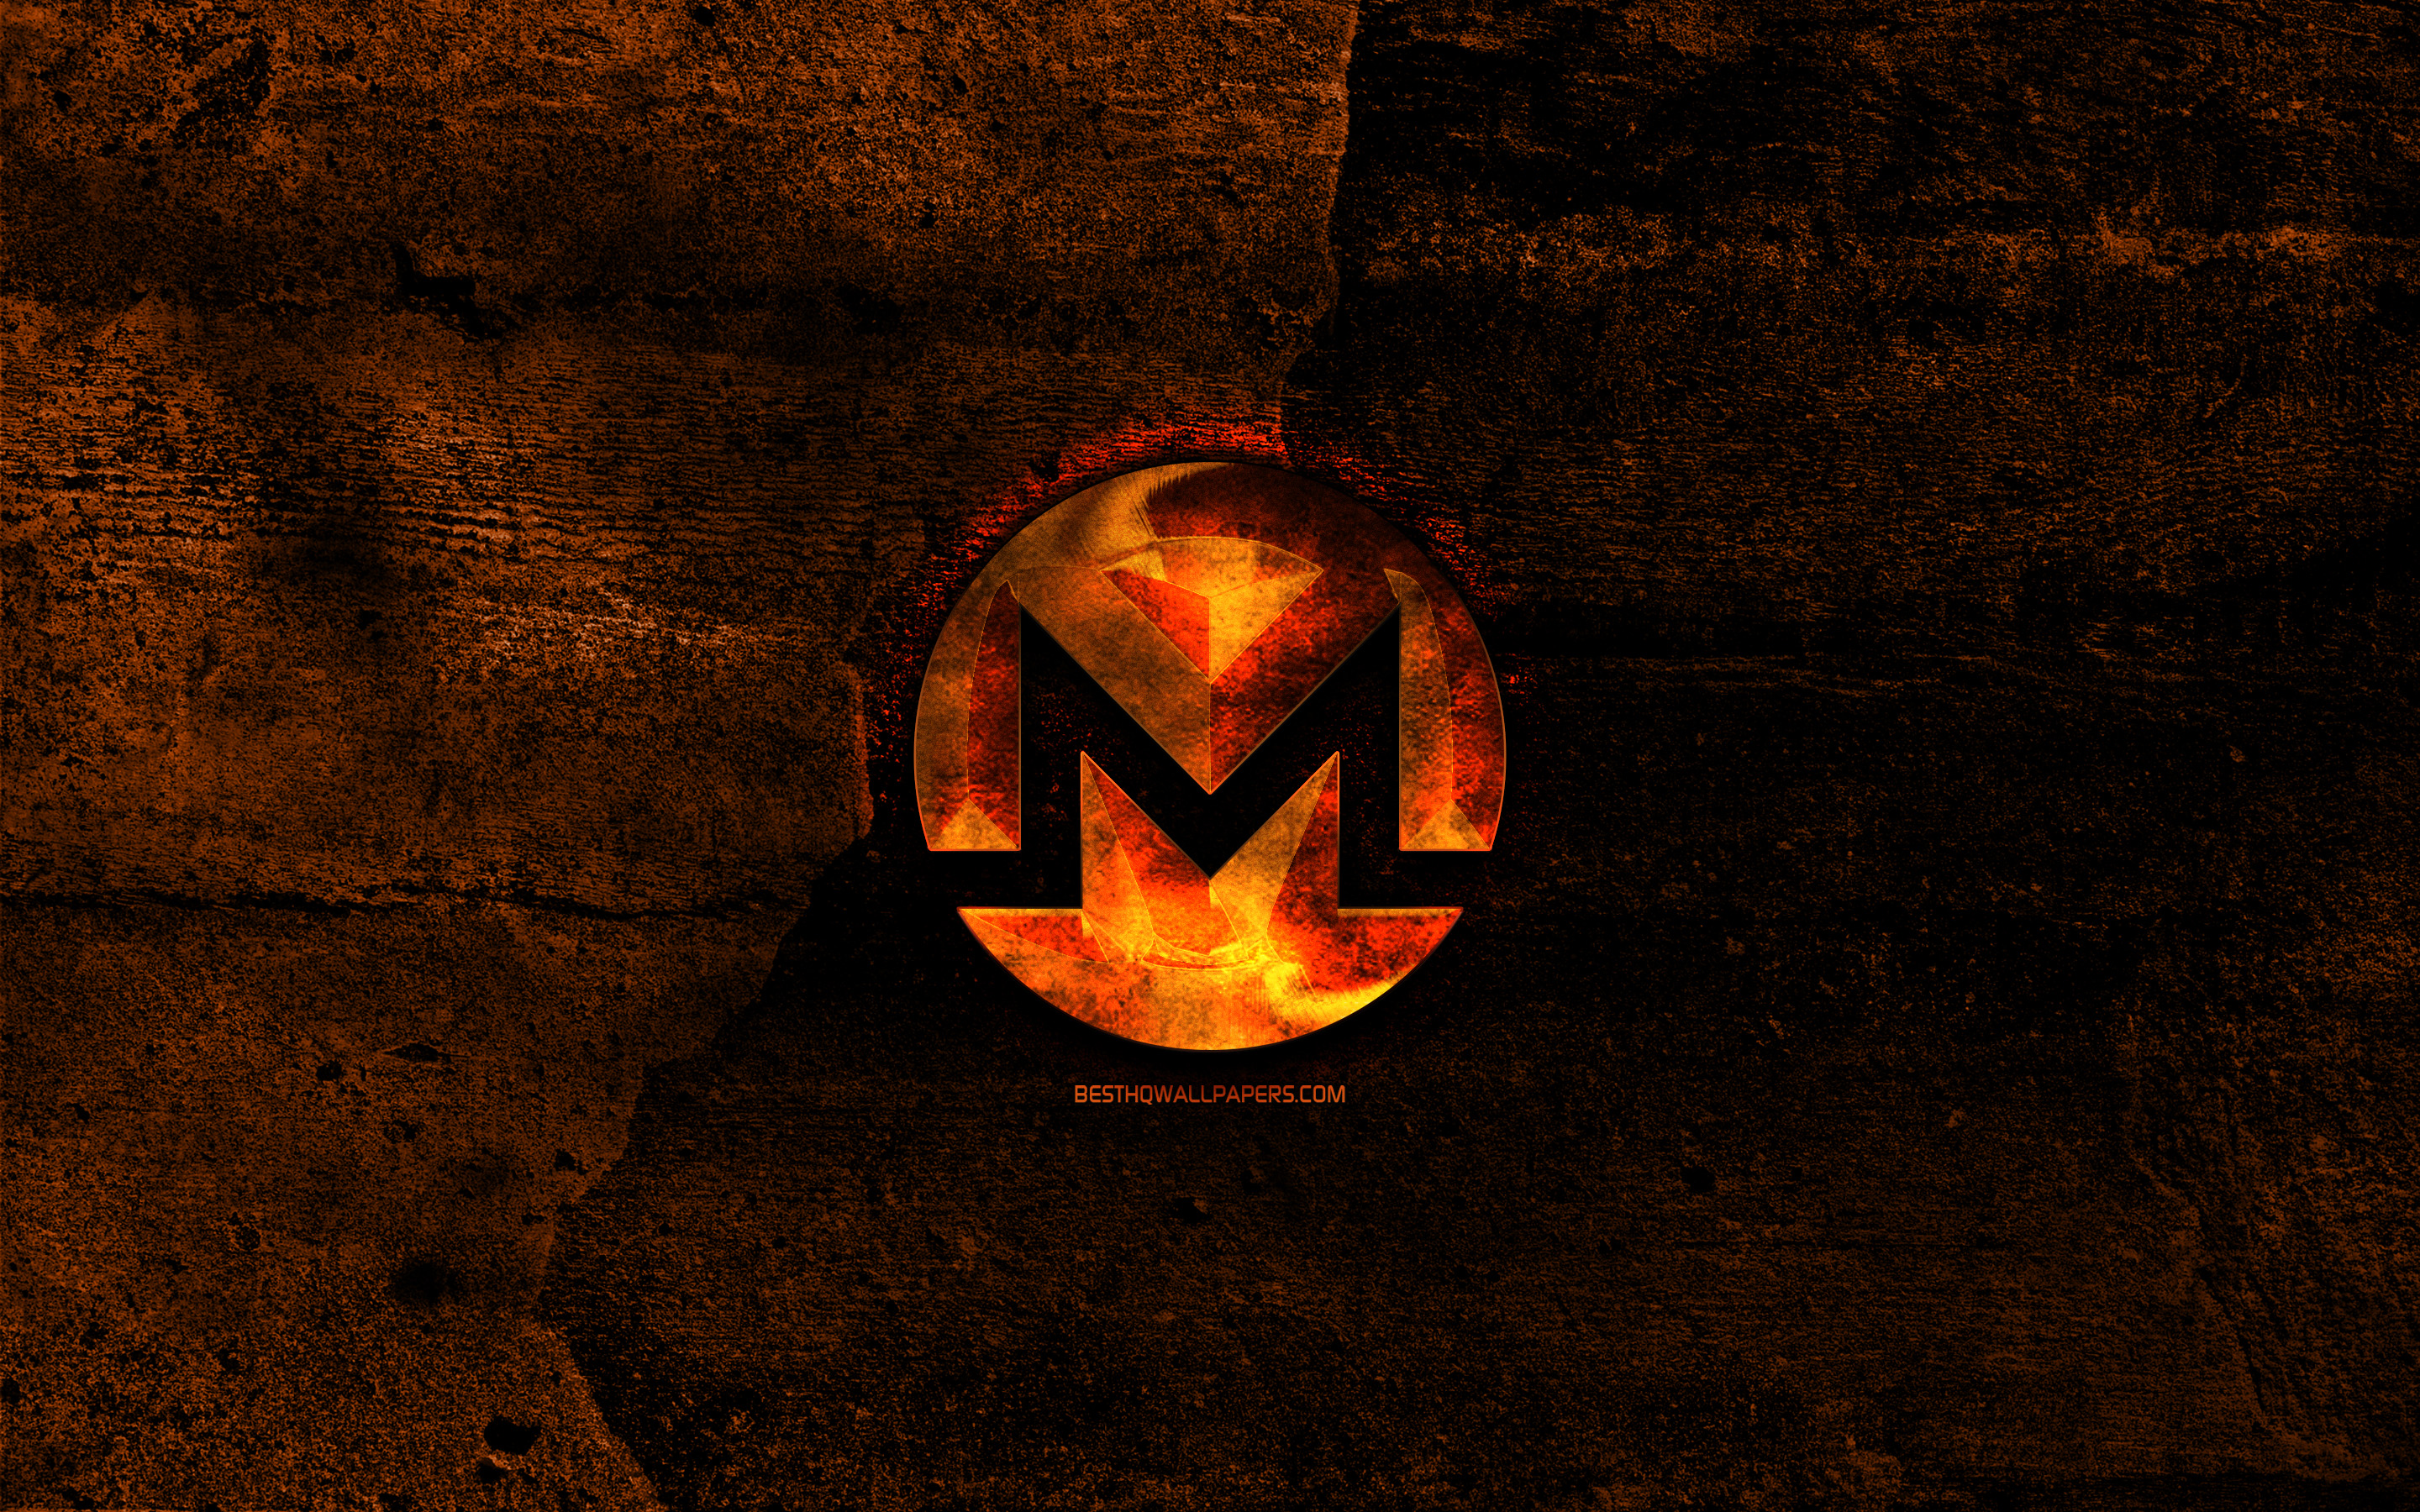 Download wallpaper Monero fiery logo, orange stone background, creative, Monero logo, cryptocurrency, Monero for desktop with resolution 2880x1800. High Quality HD picture wallpaper